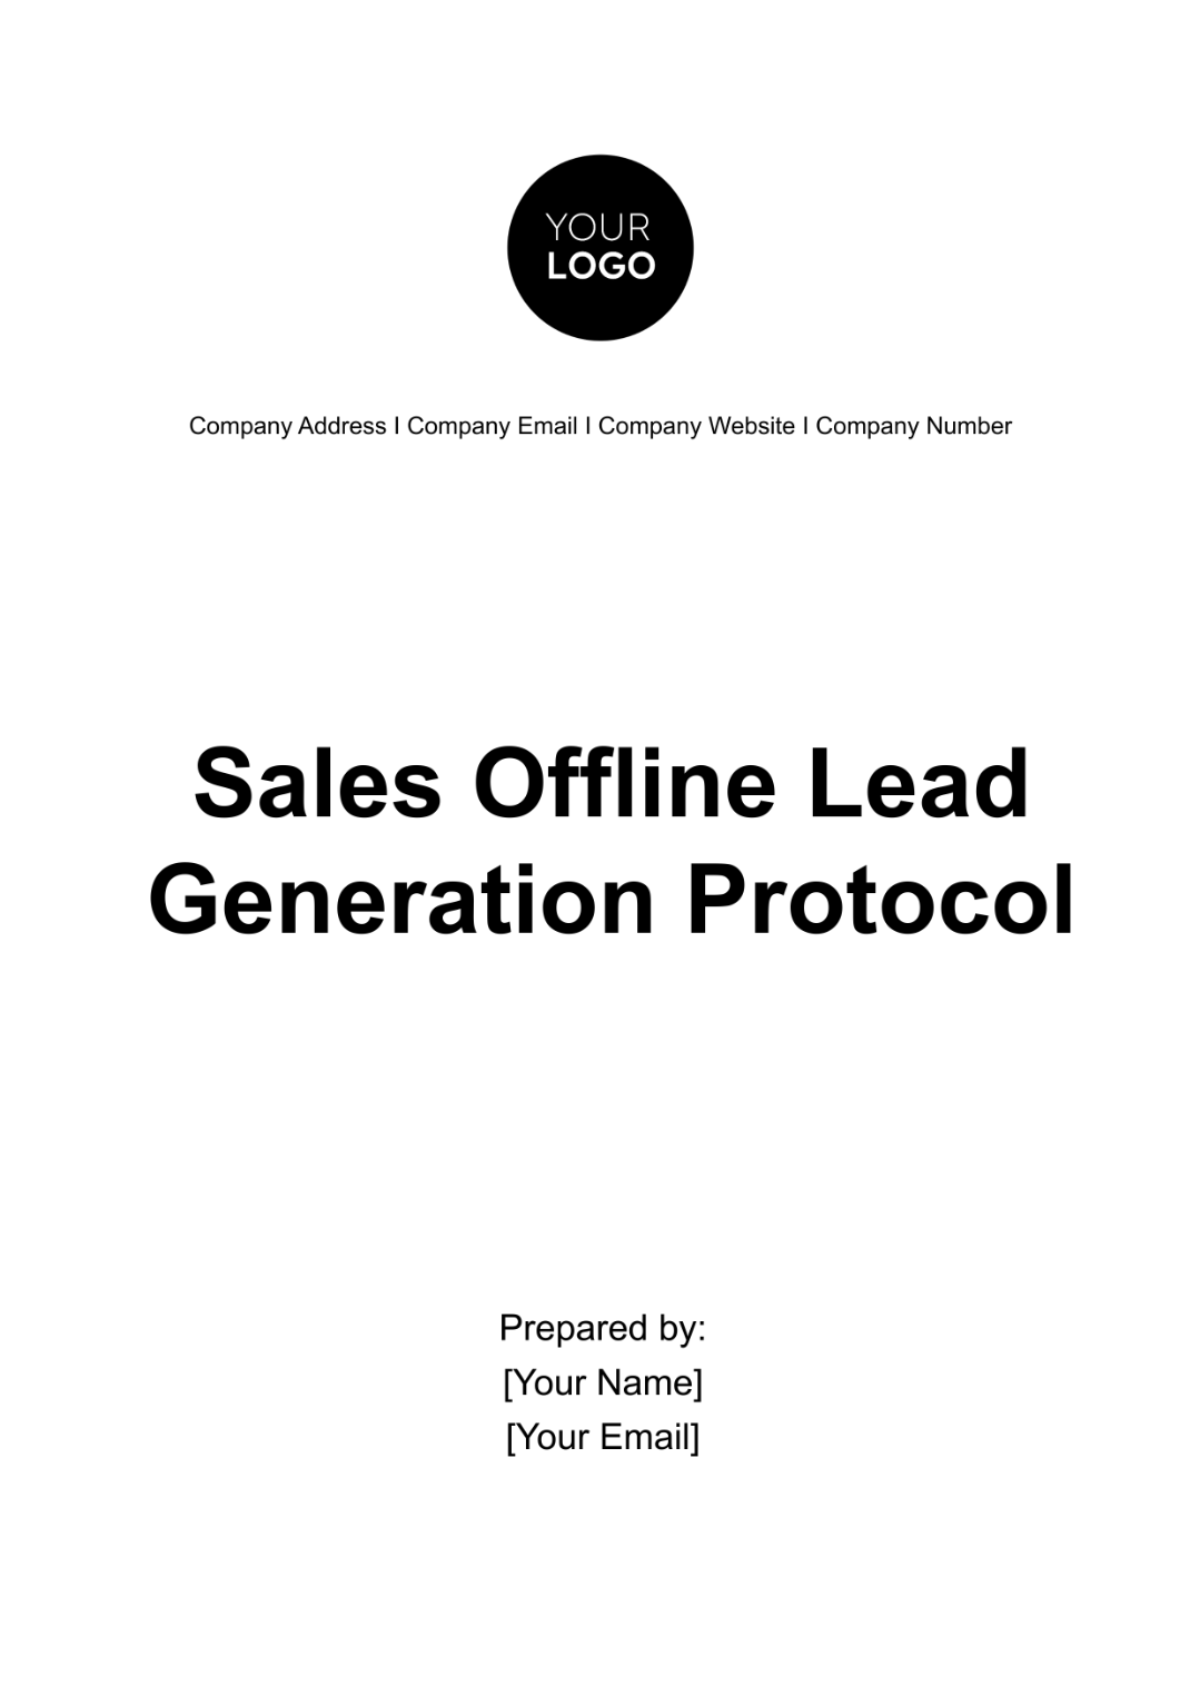 Free Sales Offline Lead Generation Protocol Template